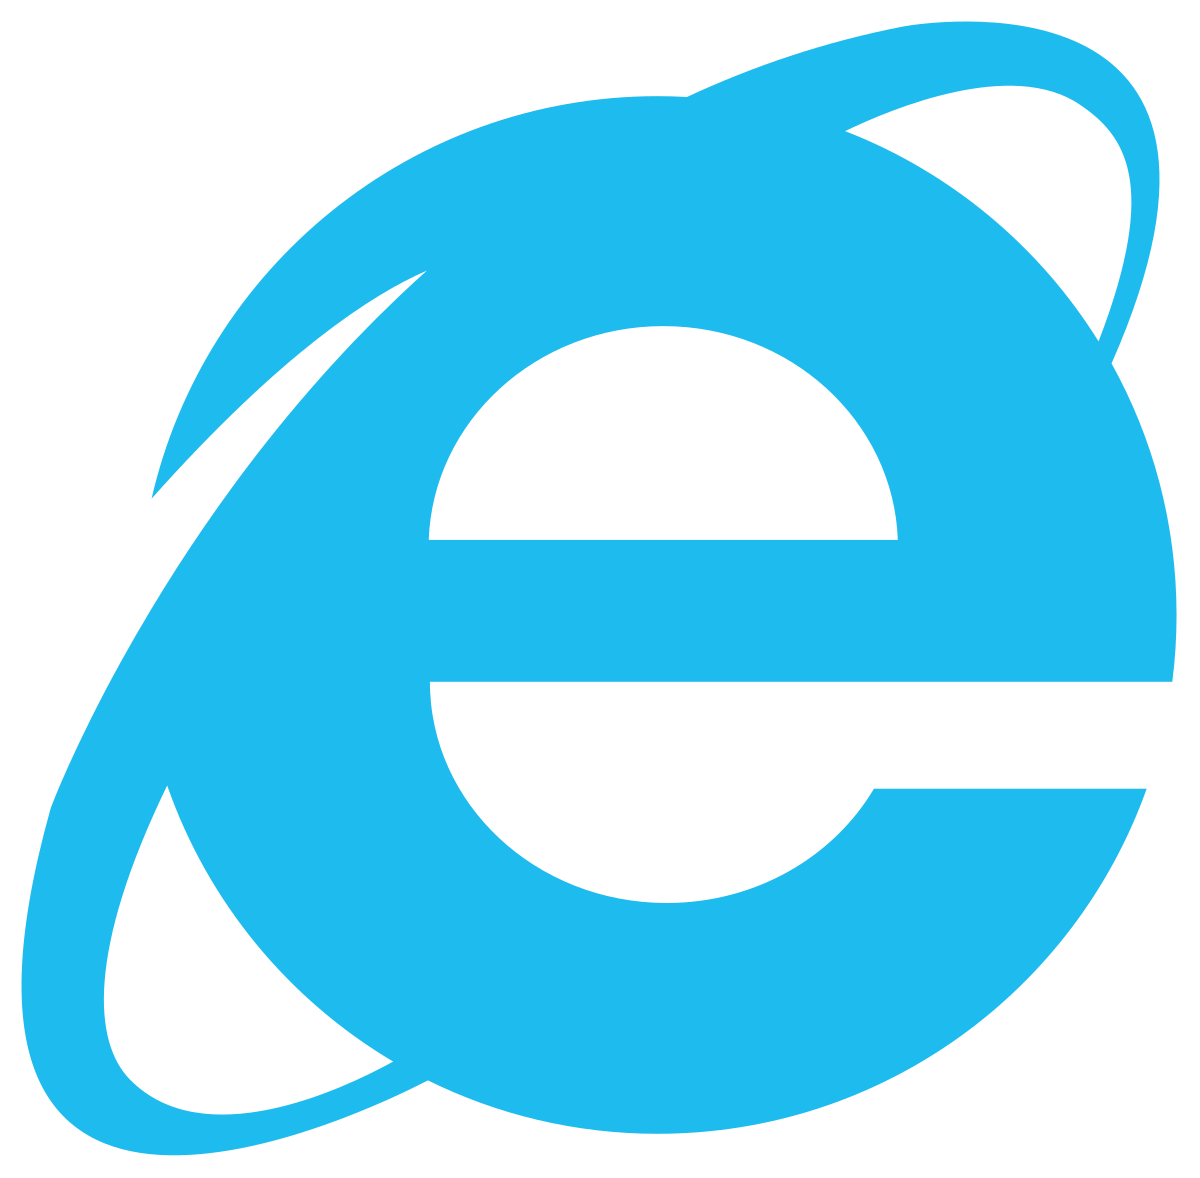 Evolution of Internet Explorer icons and logos